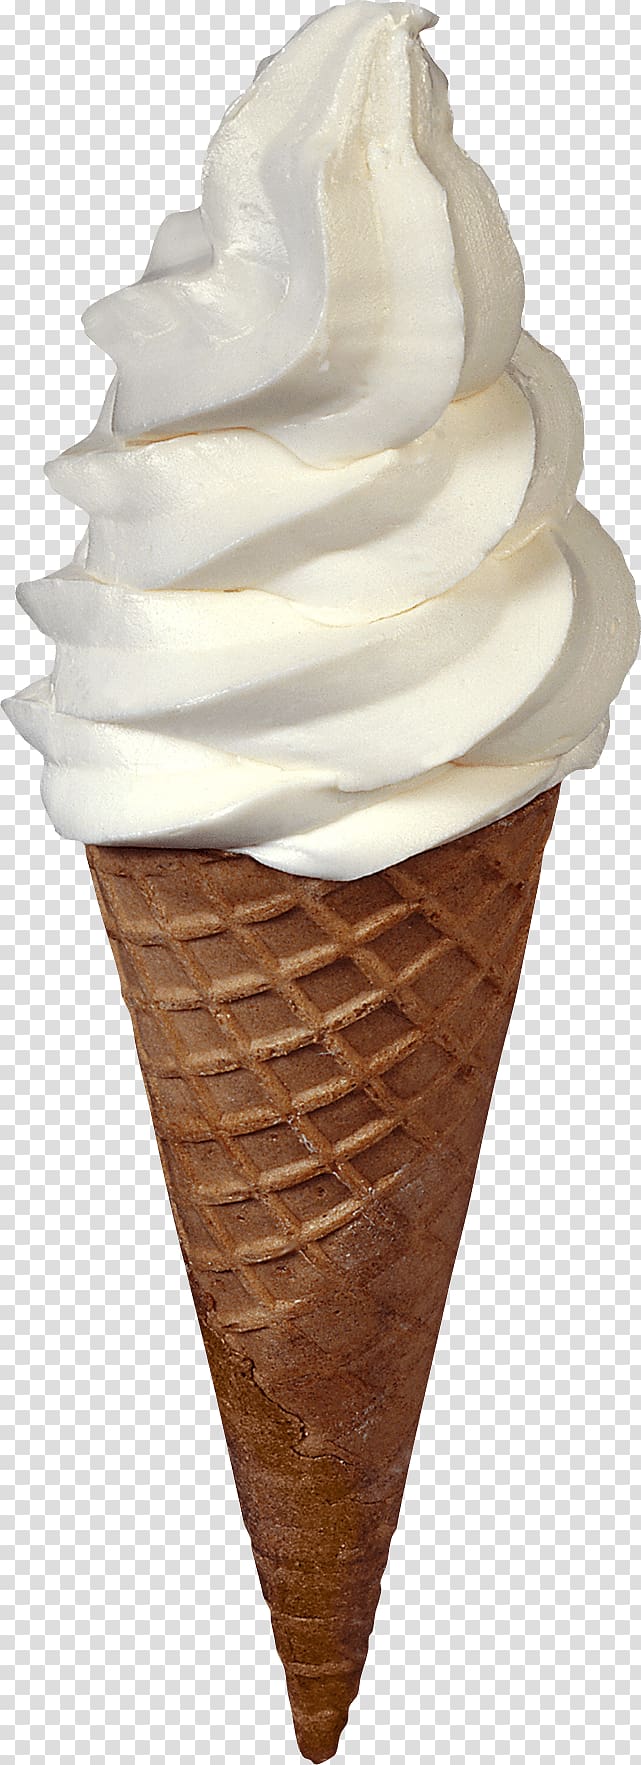 vanilla ice cream, Vanilla Soft Ice transparent background PNG clipart